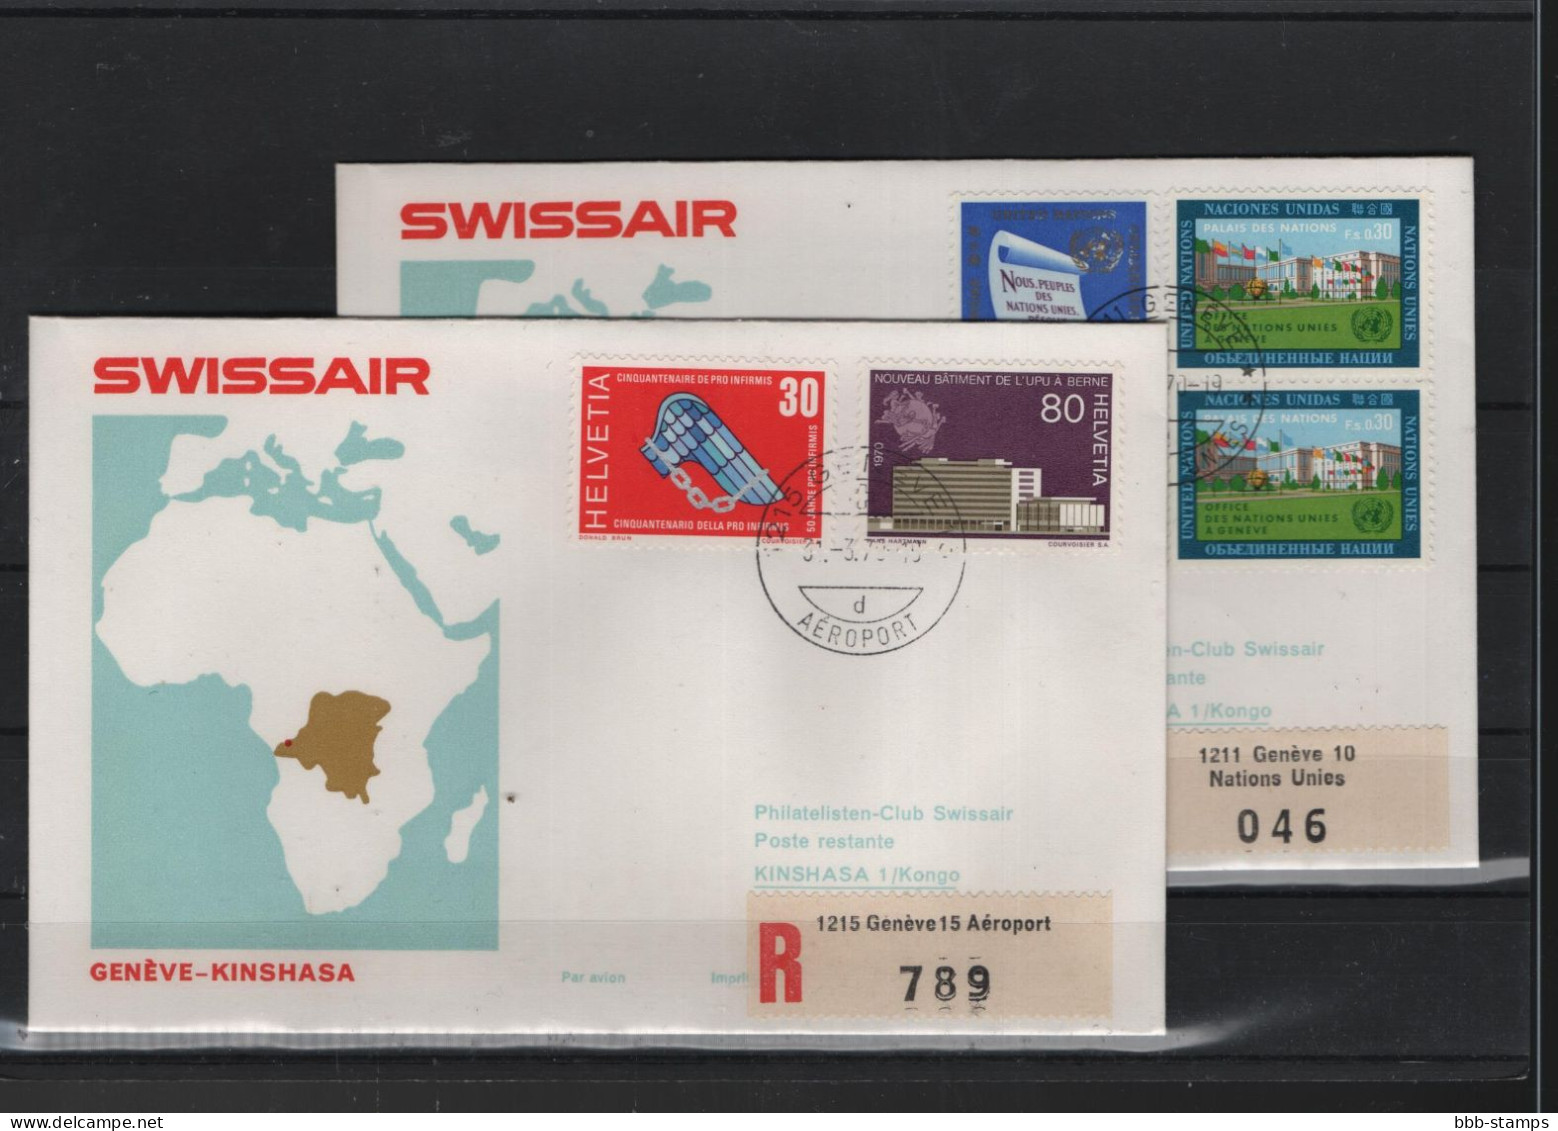 Schweiz Luftpost FFC Swissair 31.3.1970 Zürich - Kinshasa VV - First Flight Covers